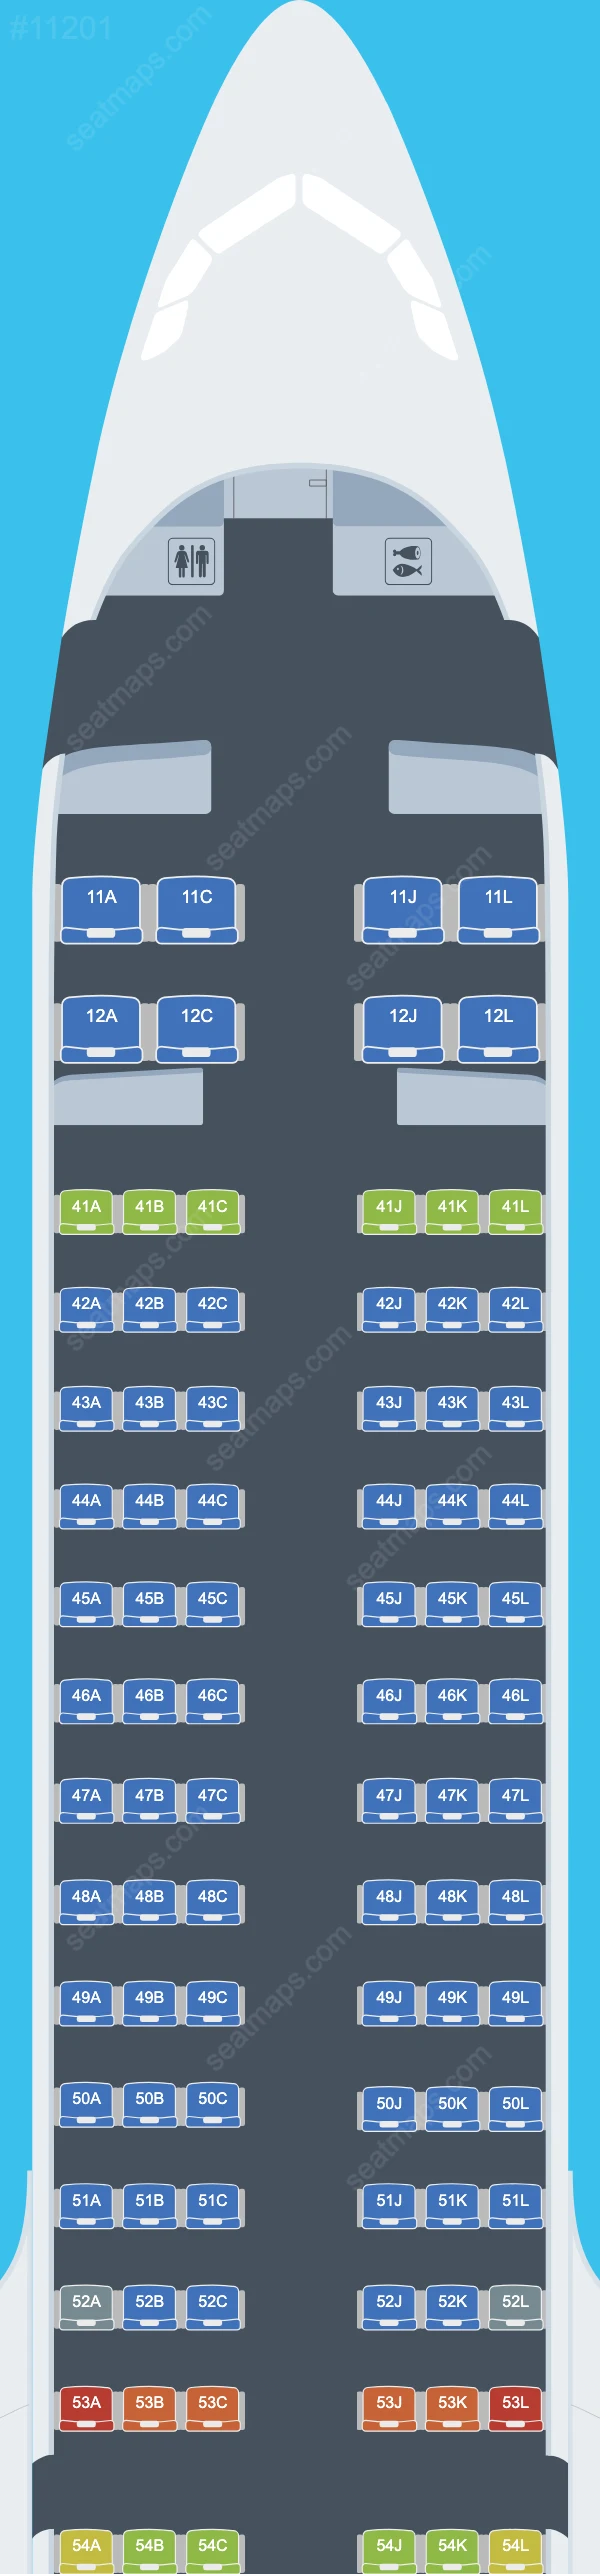 Схема салонов XiamenAir в самолетах Airbus A321neo A321neo